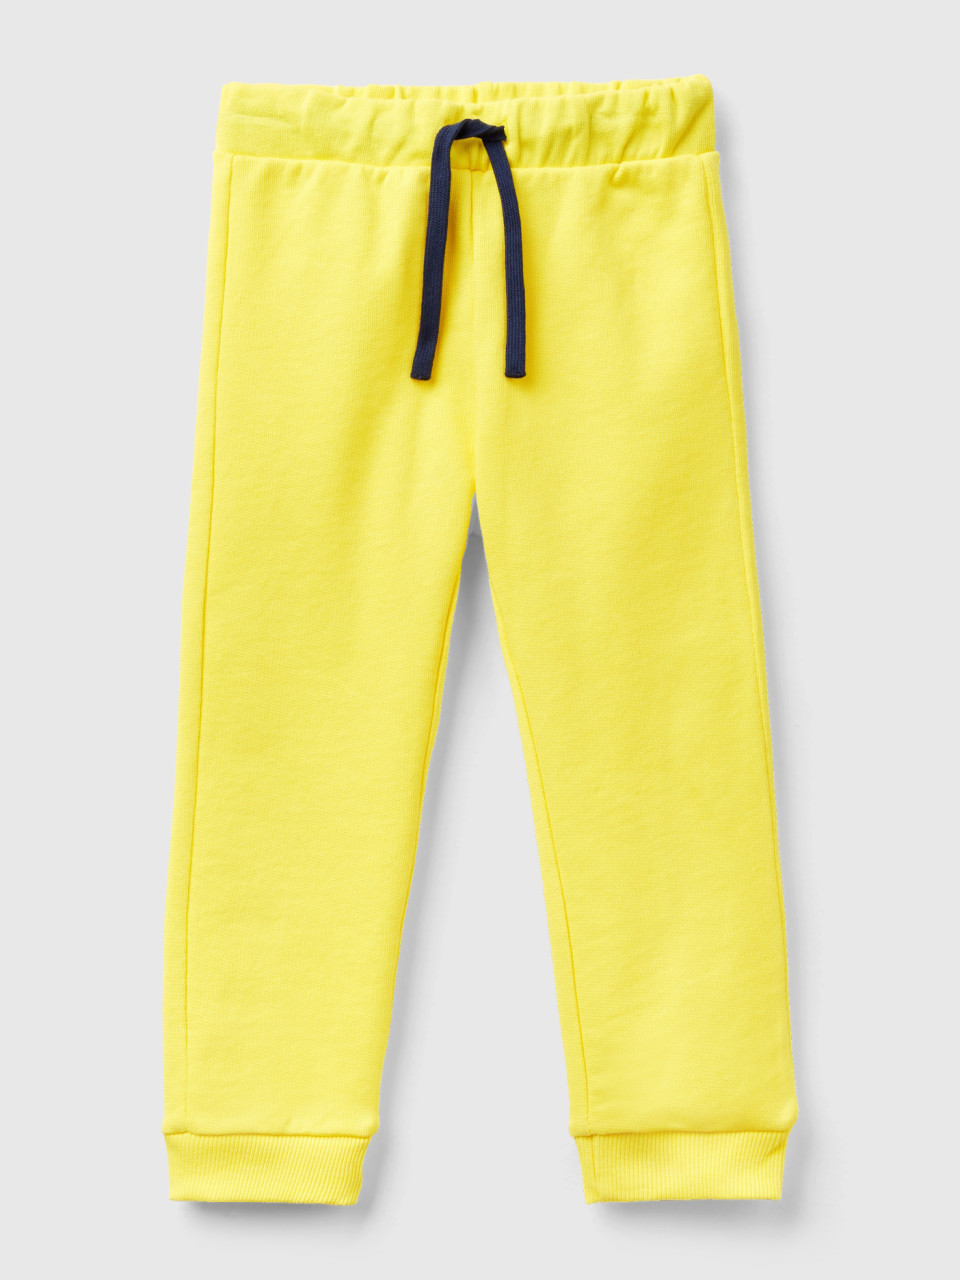 Benetton, Sweatpants With Pocket, Yellow, Kids